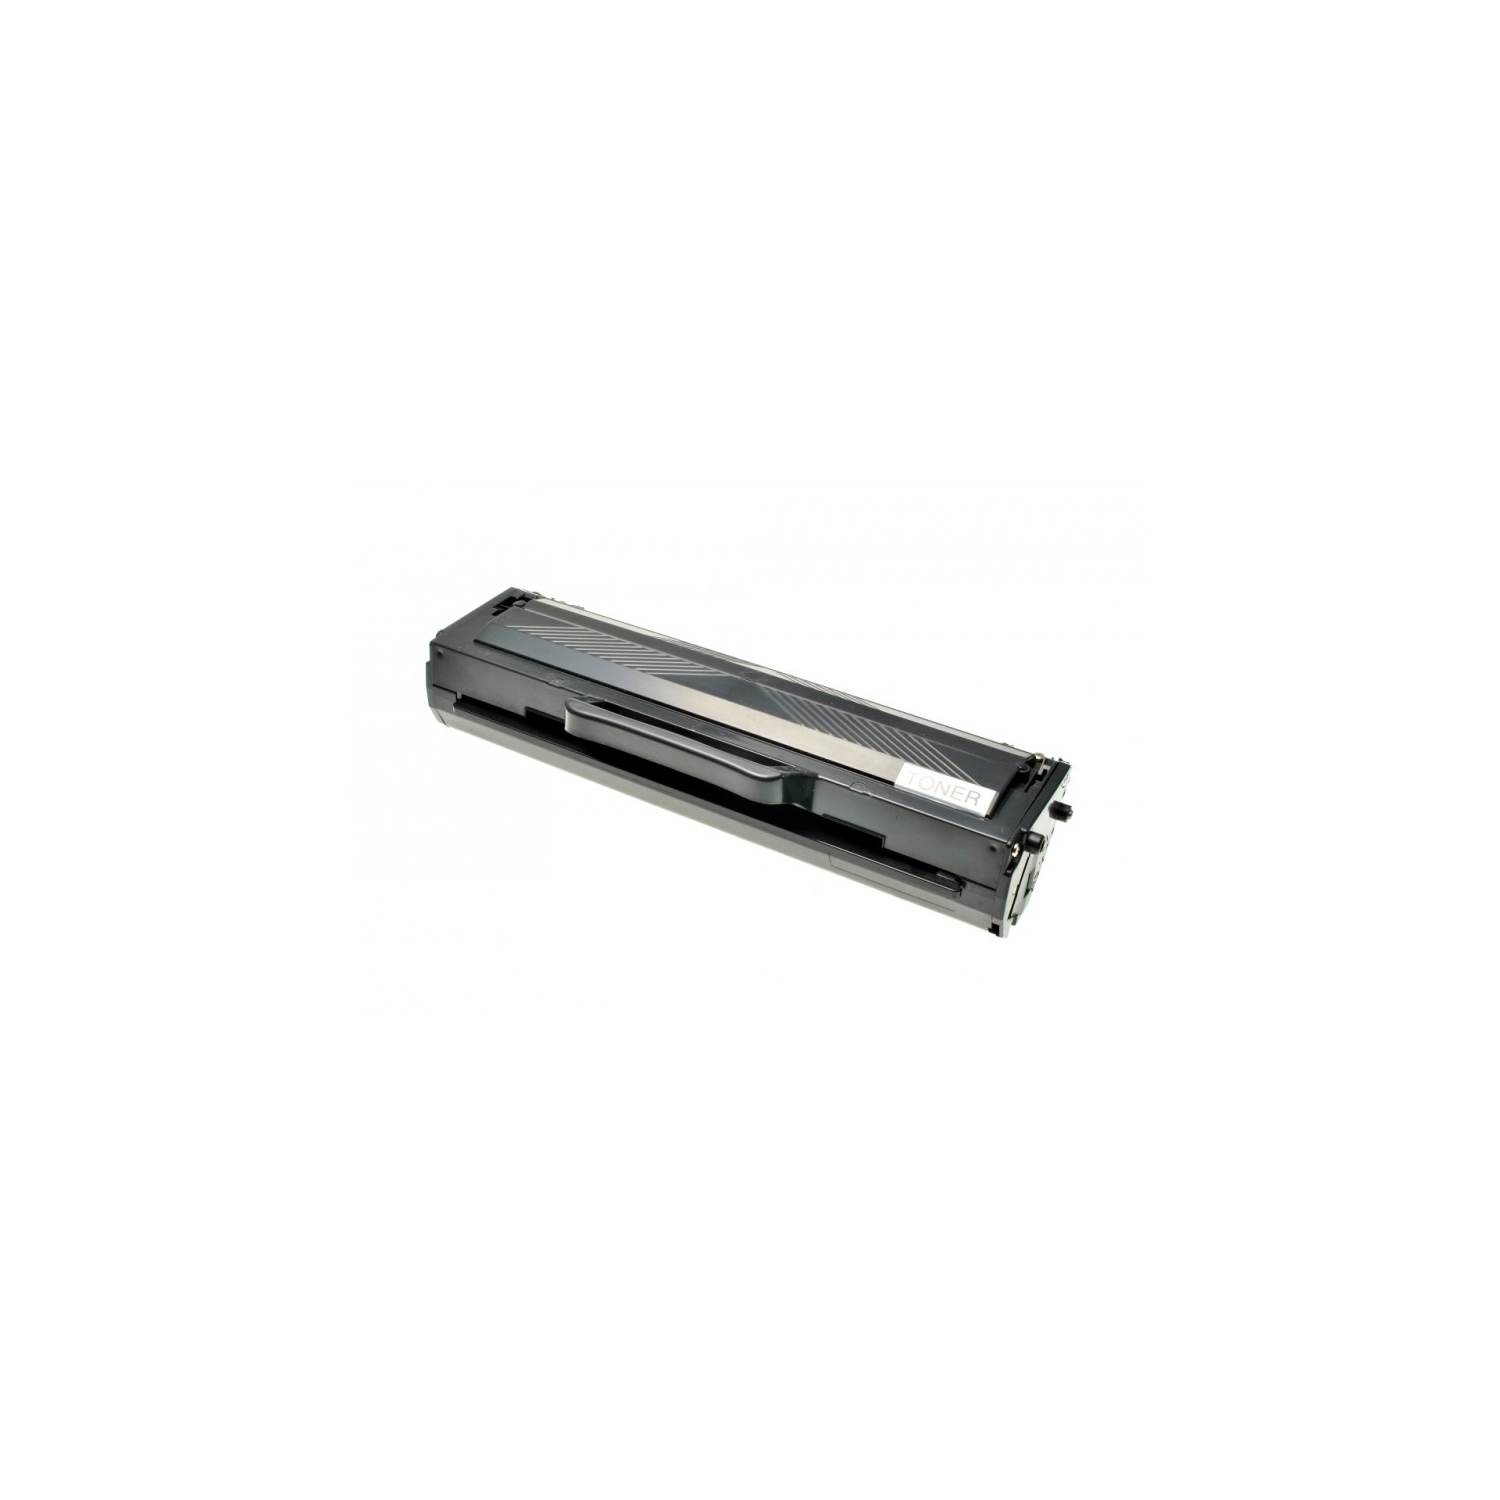 Generic Samsung MLT-D111S New Black Toner Cartridge (111s) for use in Xpress SL-M2020W, M2070FW, M2070W